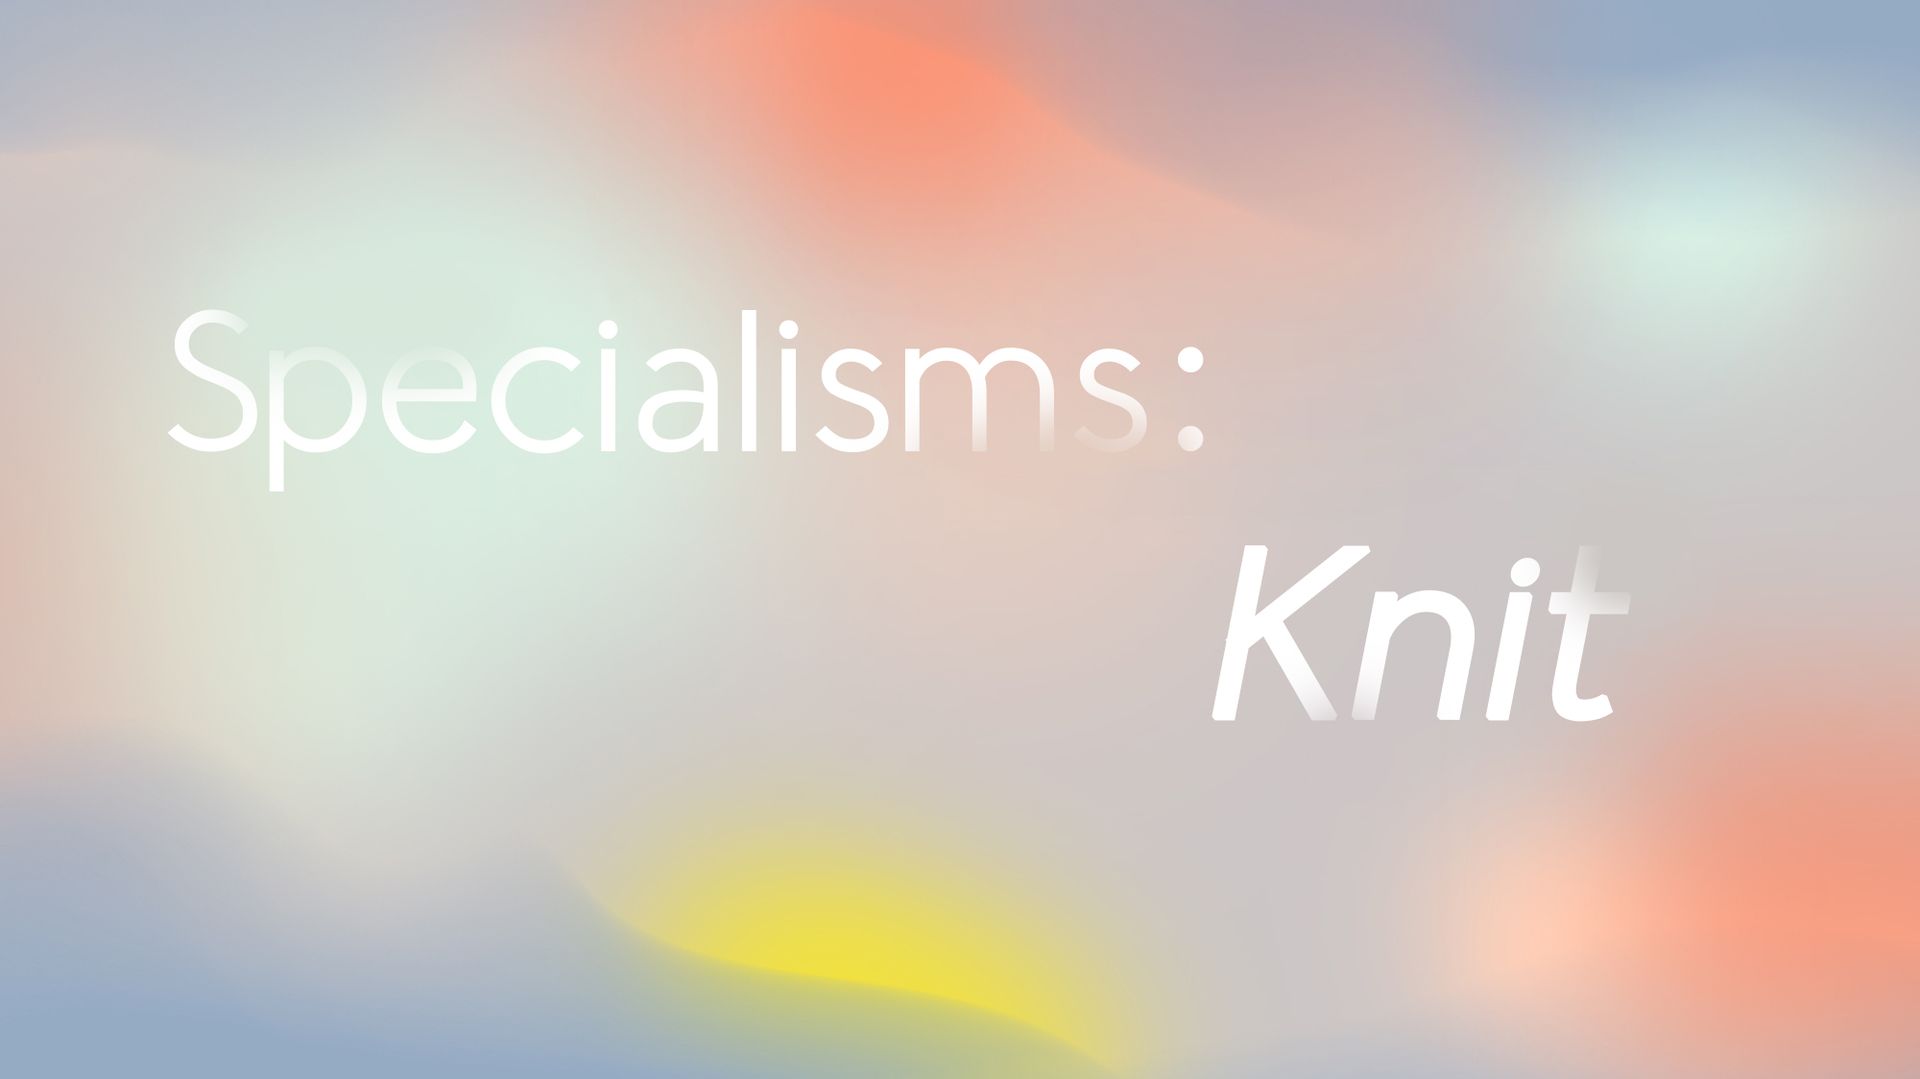 Specialism: Knit